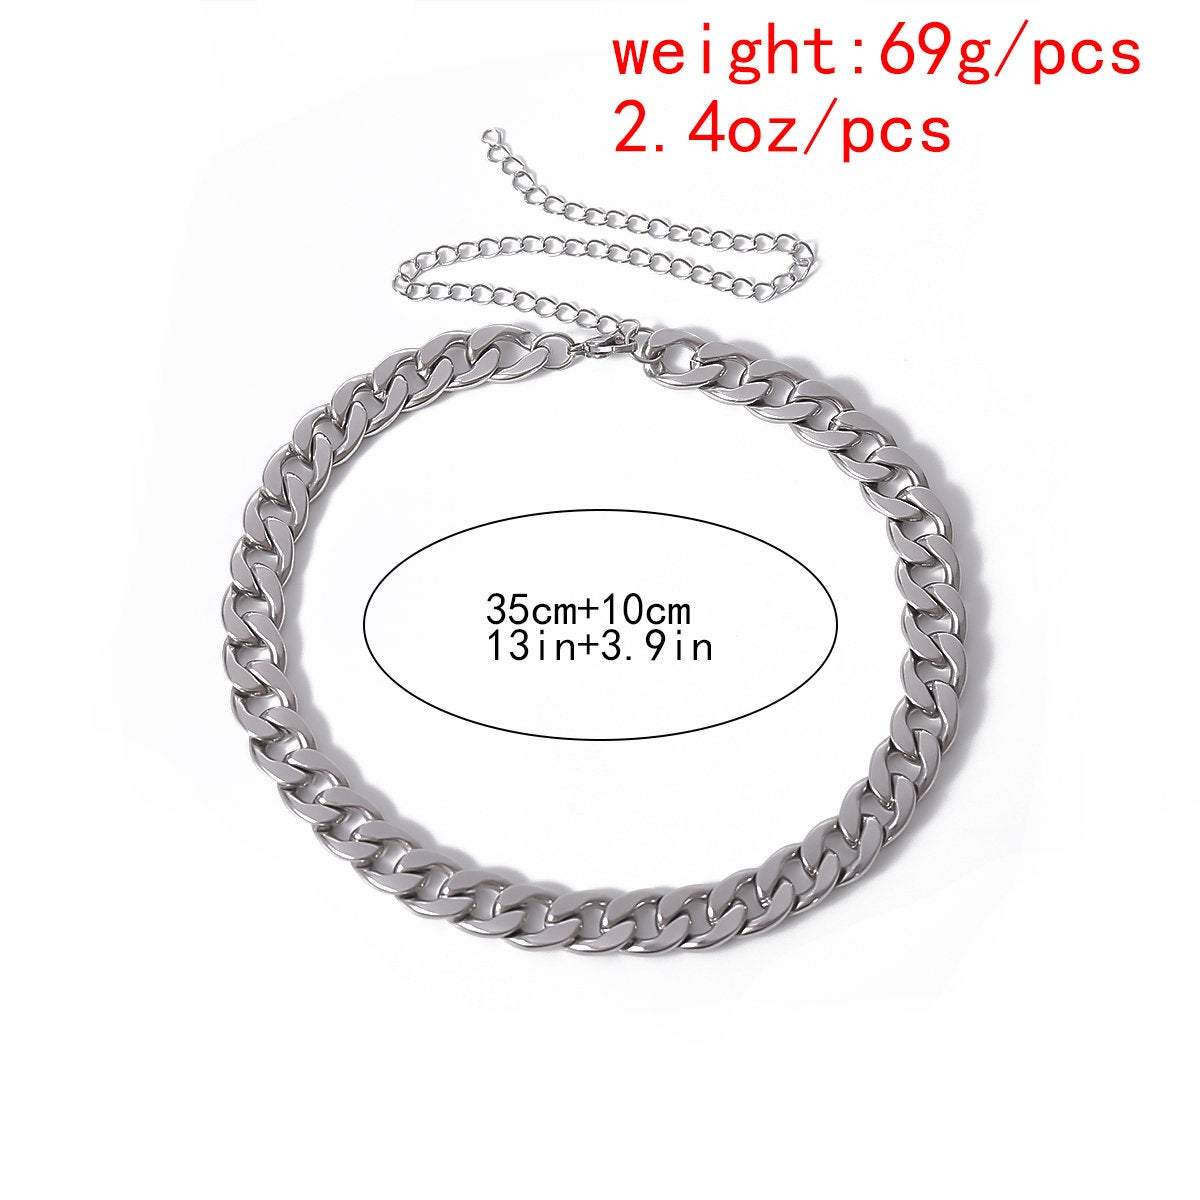  Didiseaon 8pcs Stainless Steel Chain Choker Jewelry